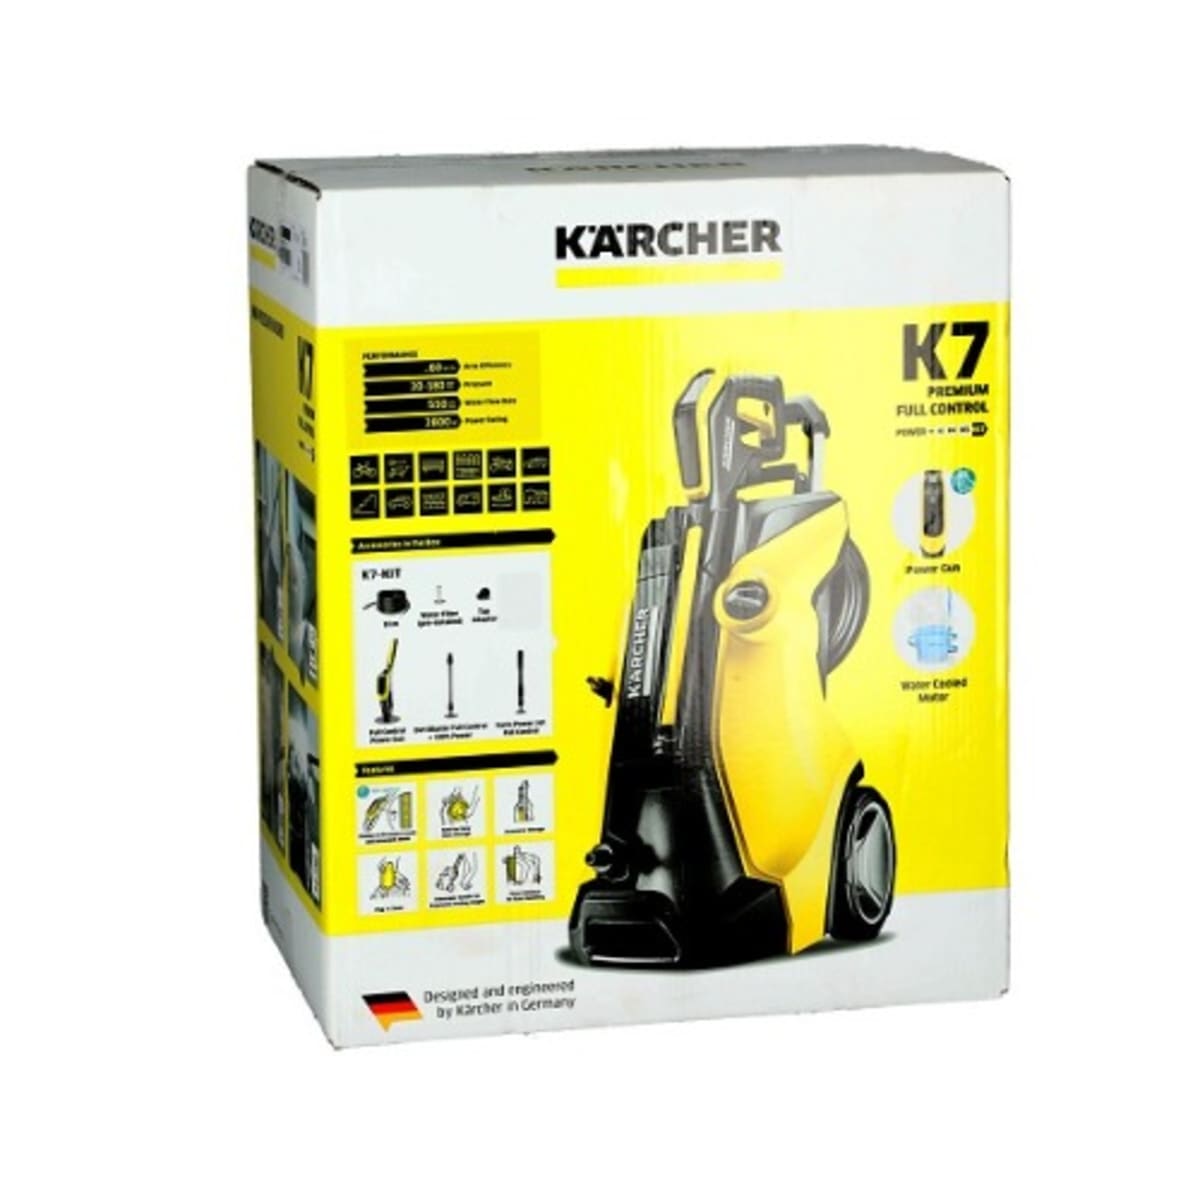 Karcher K7 Compact Car High Pressure Washer